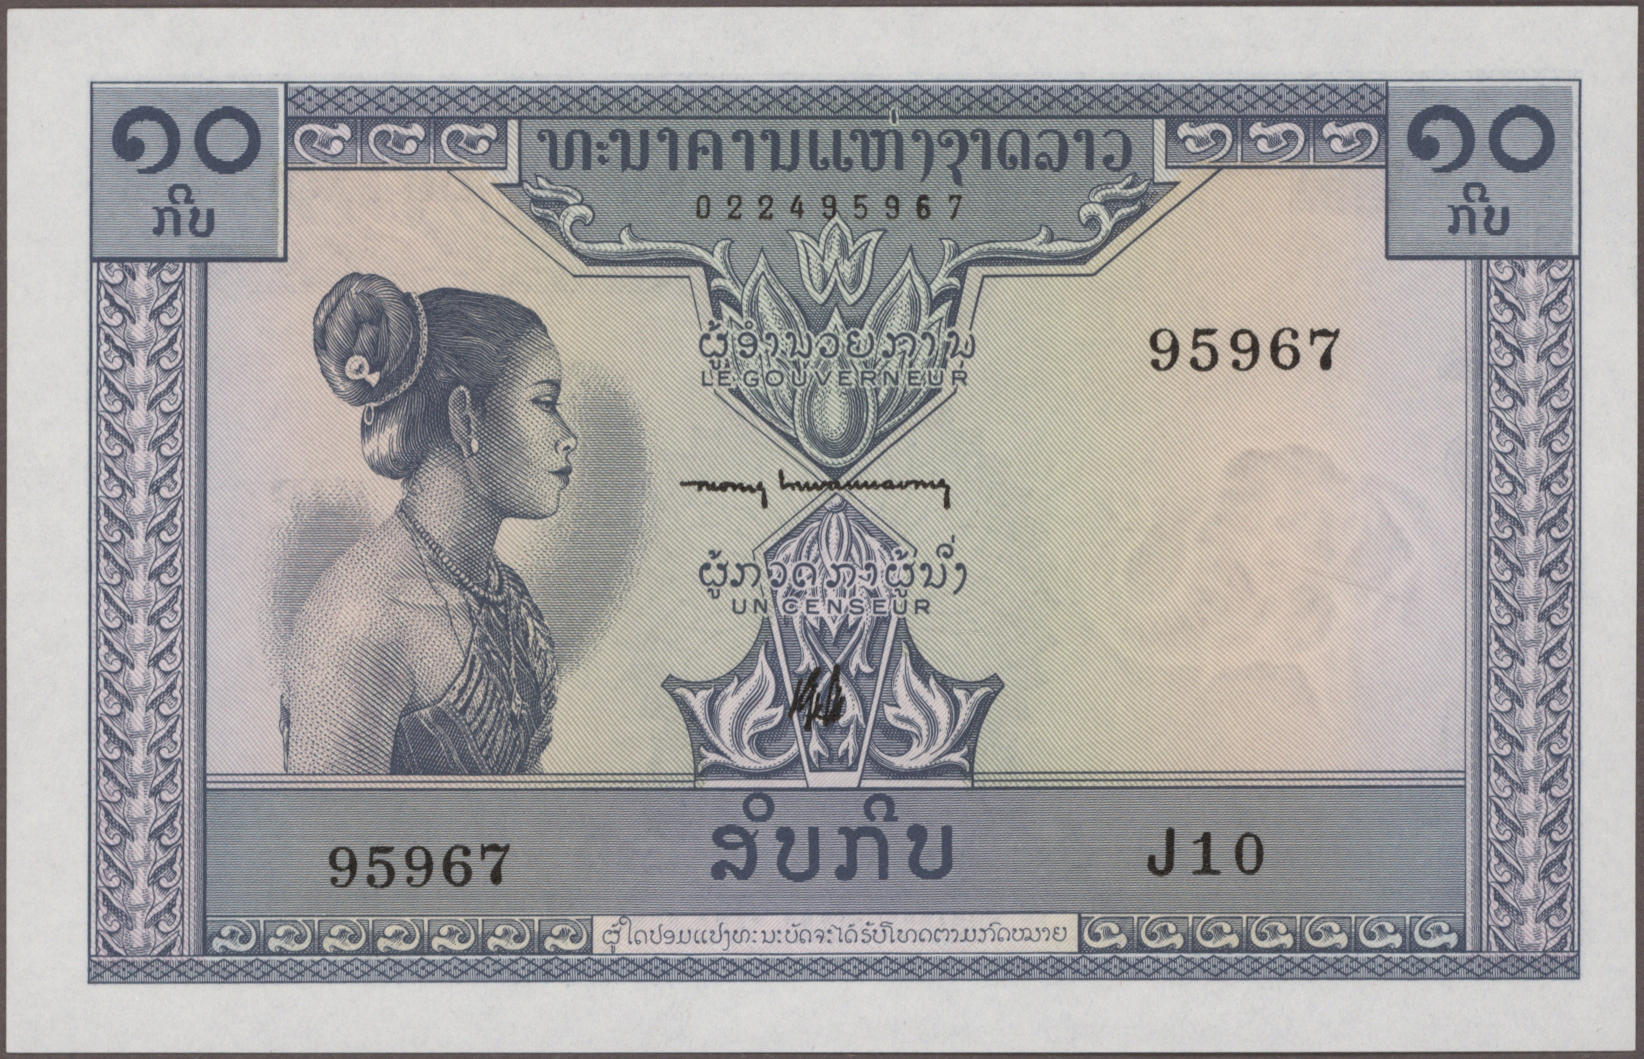 Lot 00265 - Laos | Banknoten  -  Auktionshaus Christoph Gärtner GmbH & Co. KG 55th AUCTION - Day 1